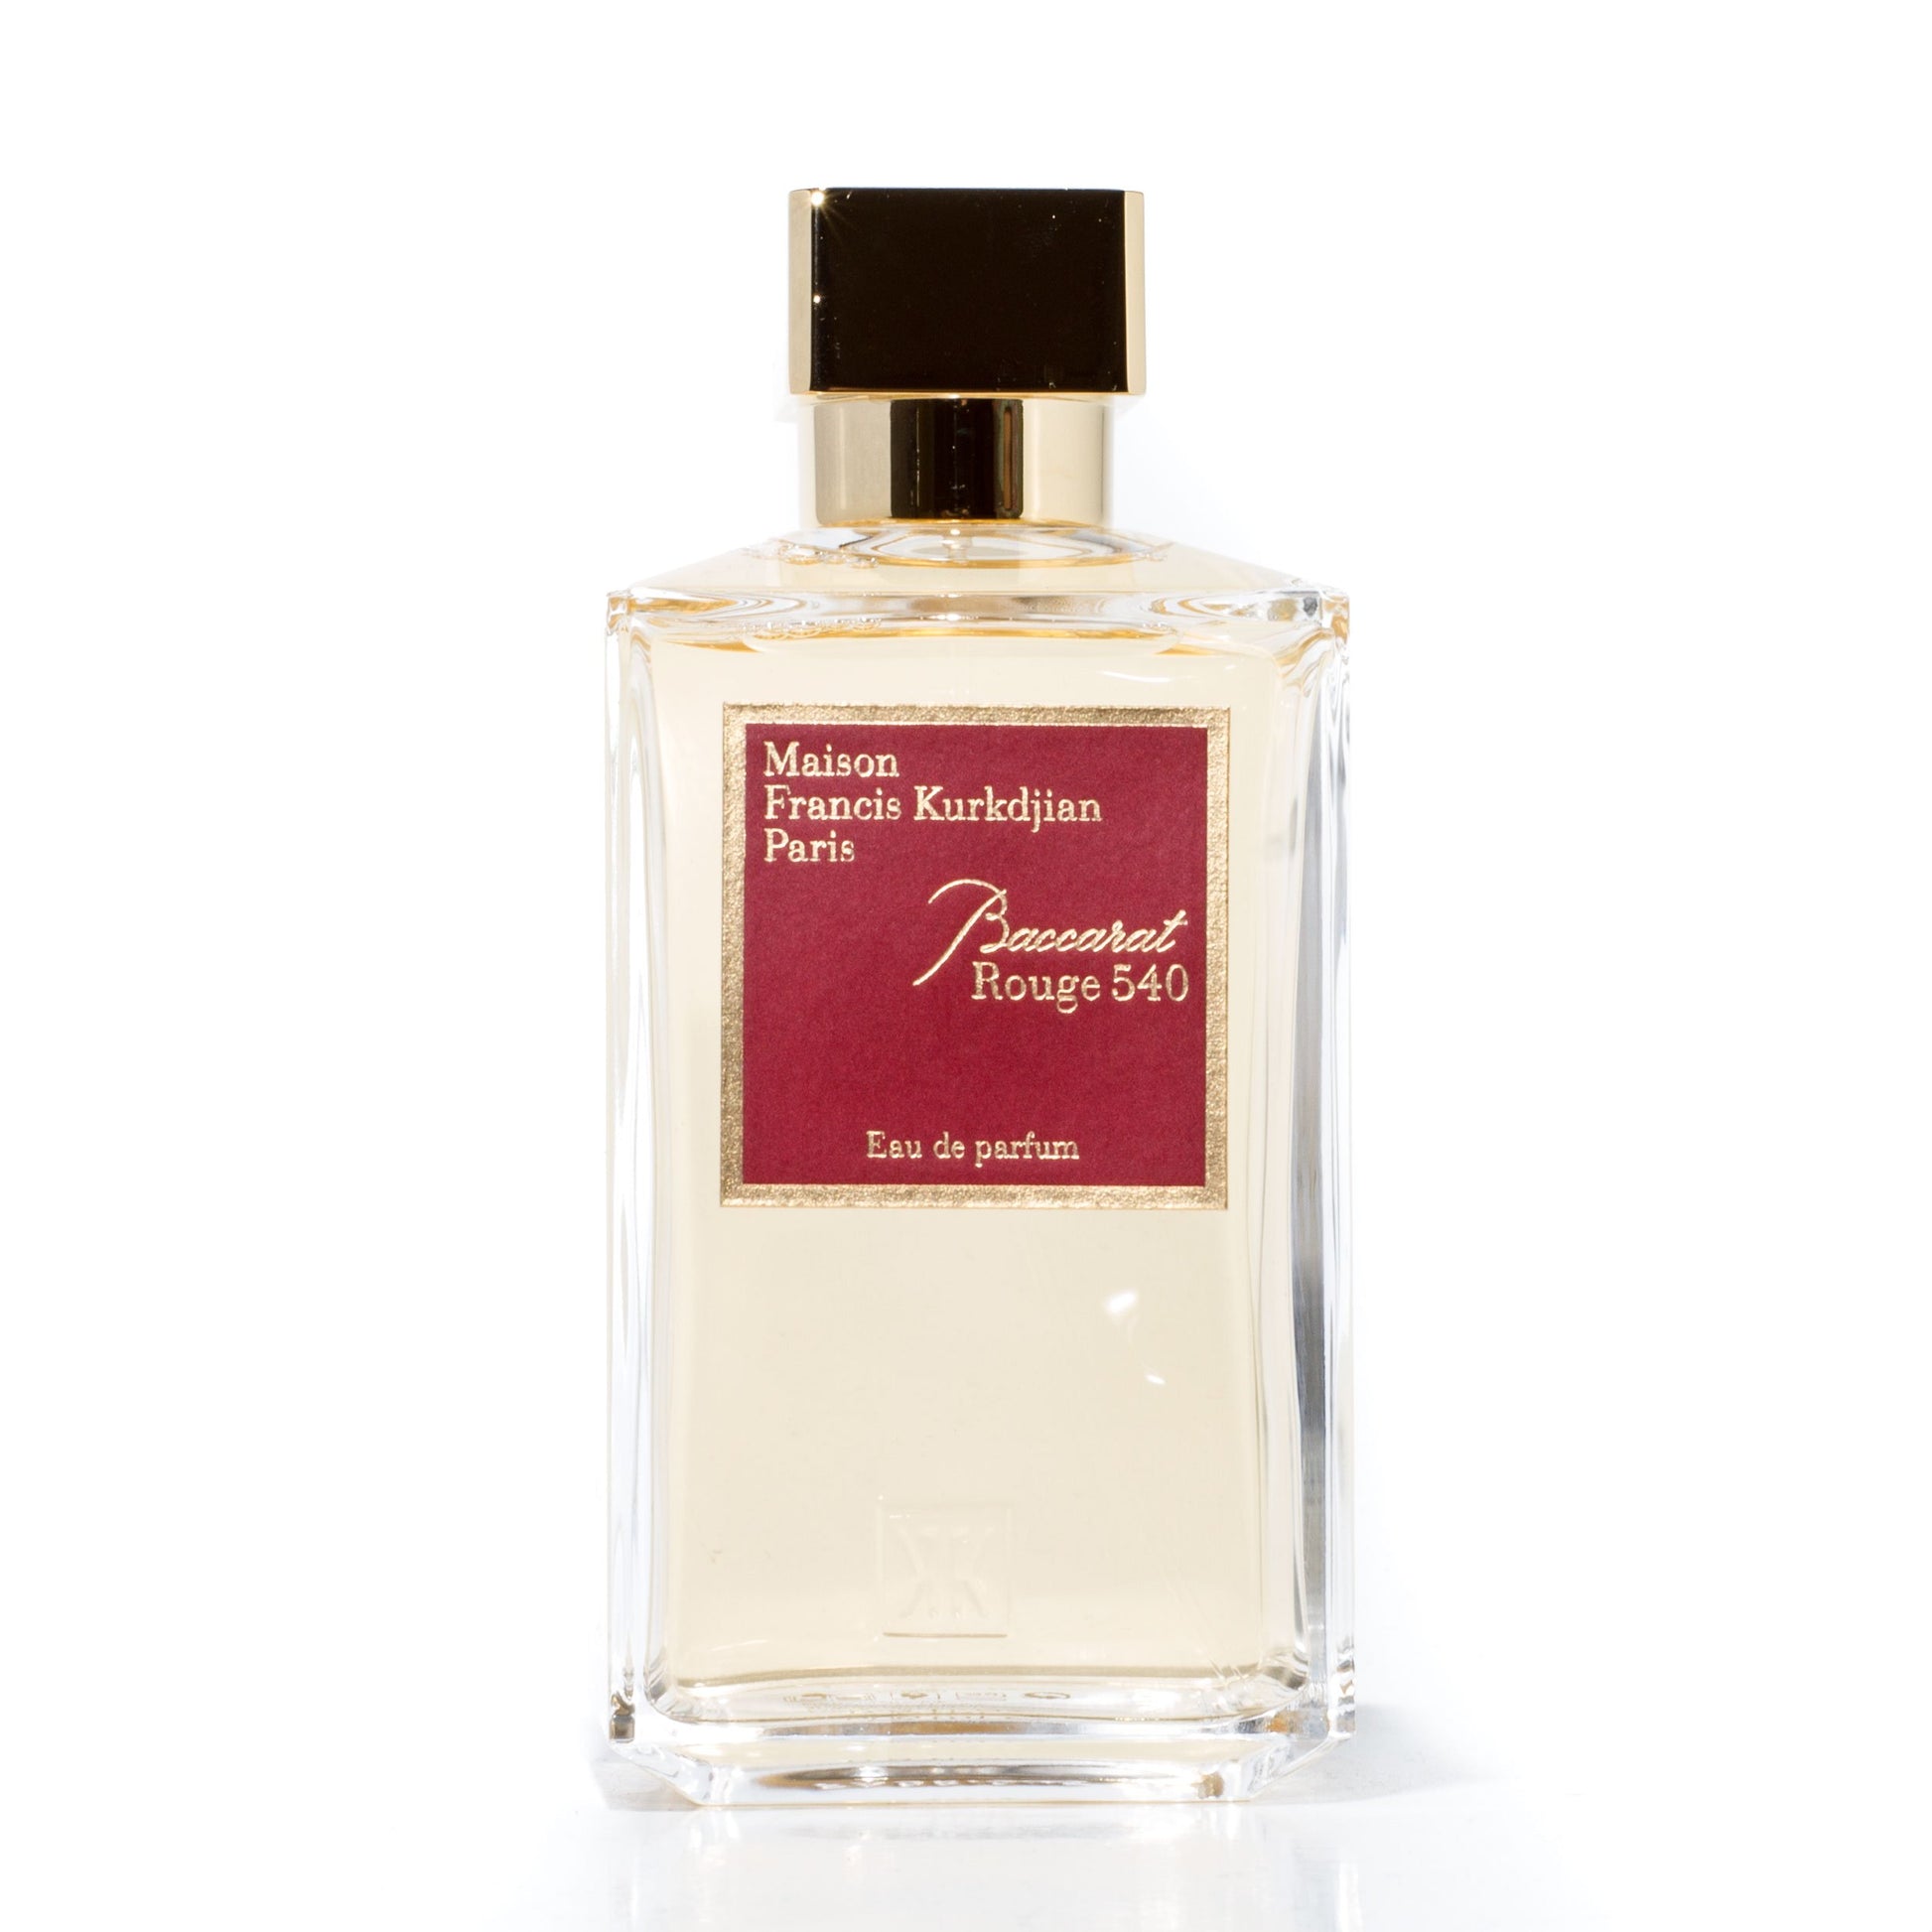 Baccarat Rouge 540 Eau de Parfum Spray for Women and Men by Maison Francis Kurkdjian, Product image 4